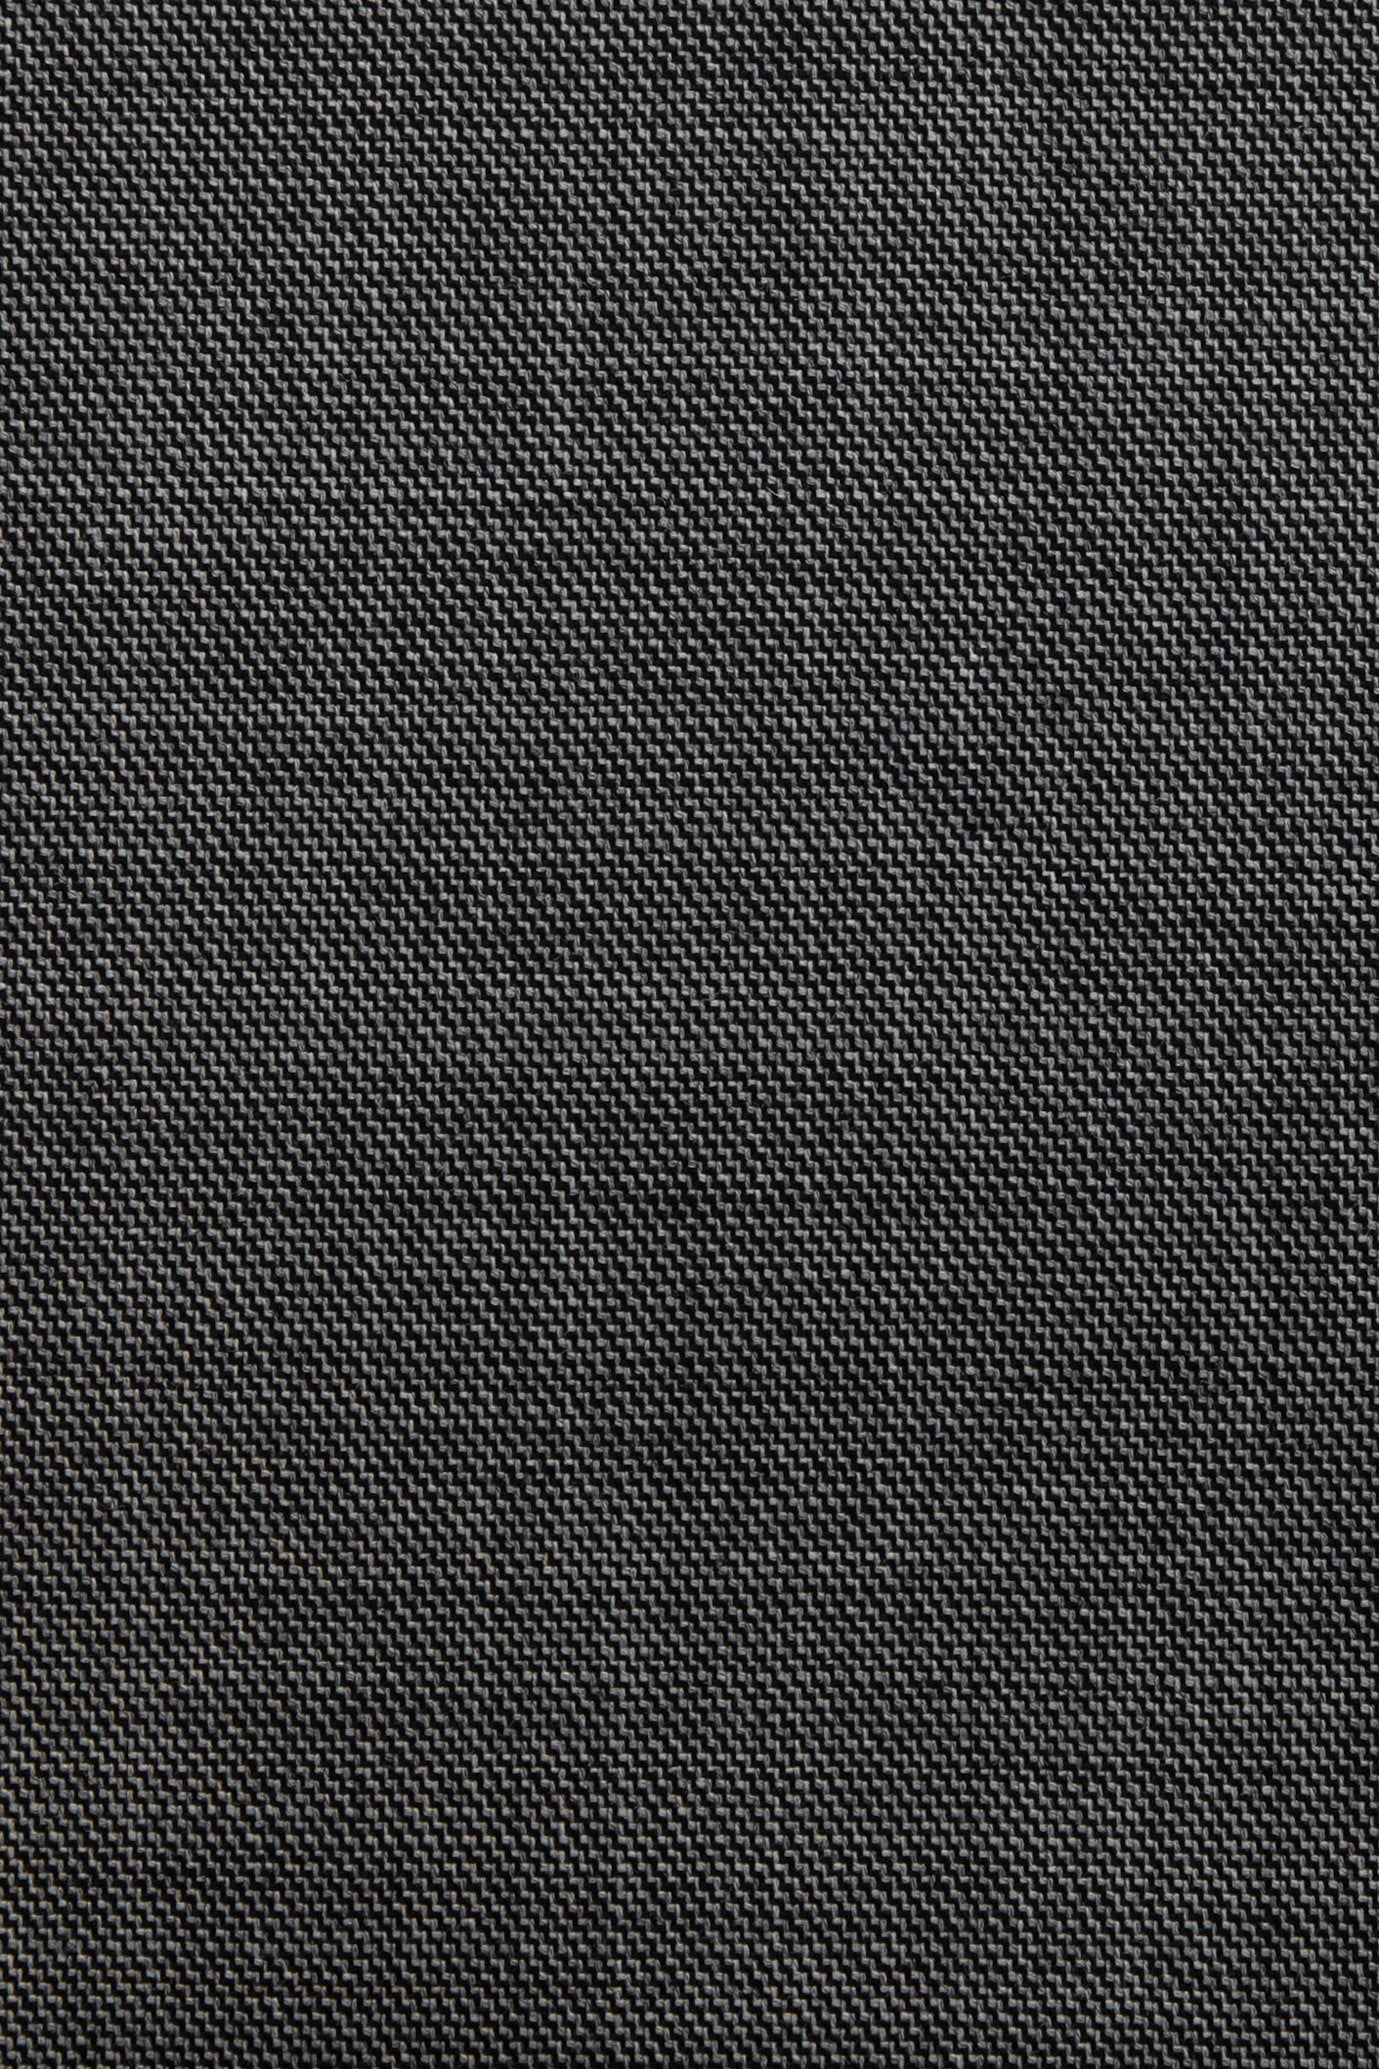 
                  
                    Medium grey sharkskin wool suit fabric swatch made in Italy
                  
                